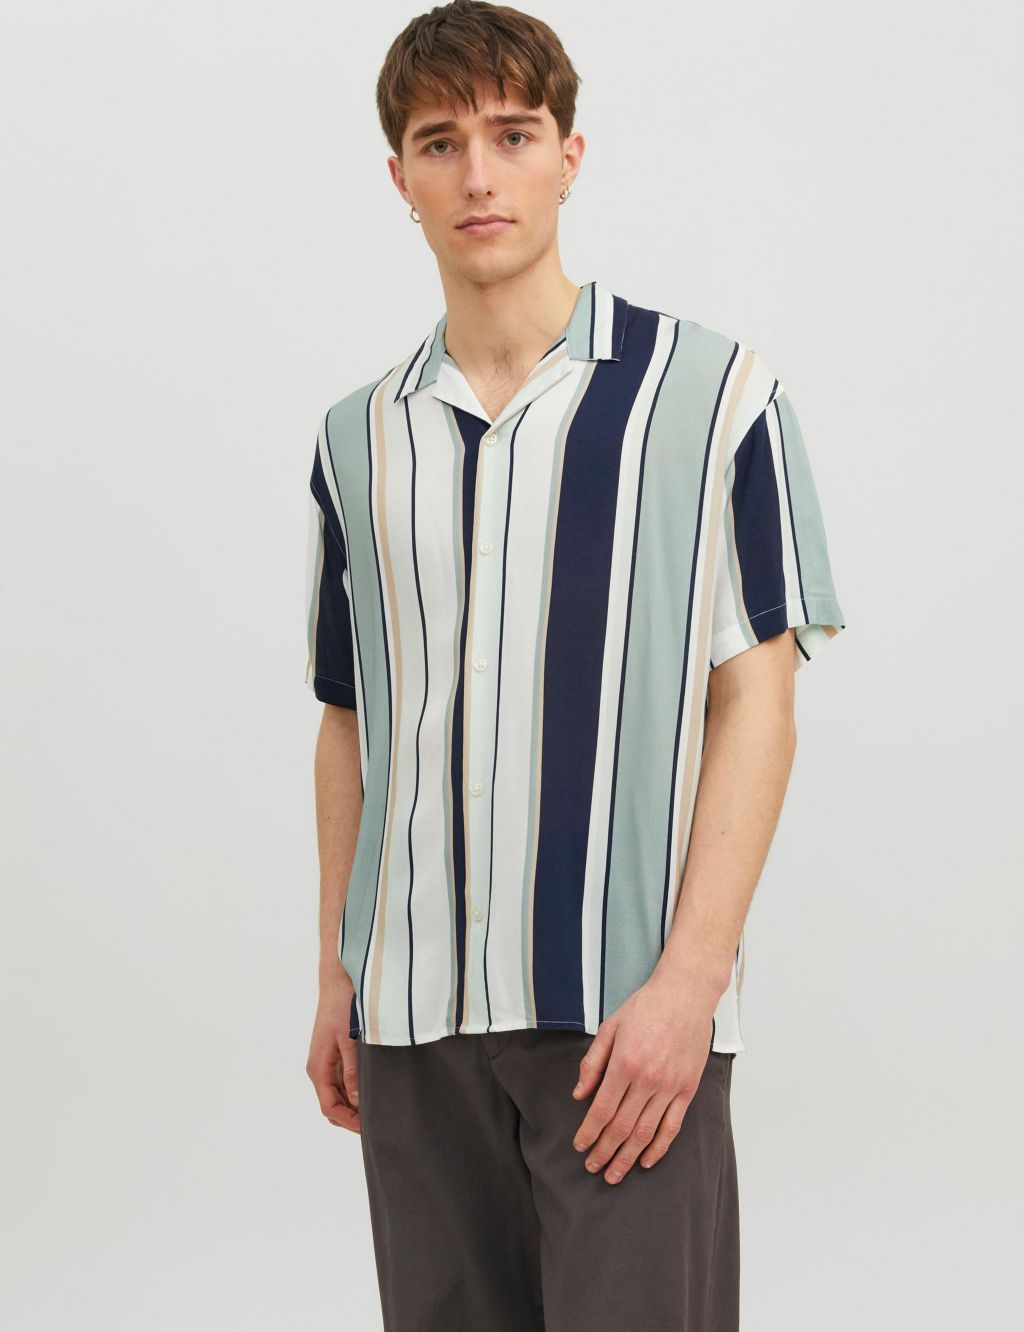 Striped Revere Oxford Shirt image 1